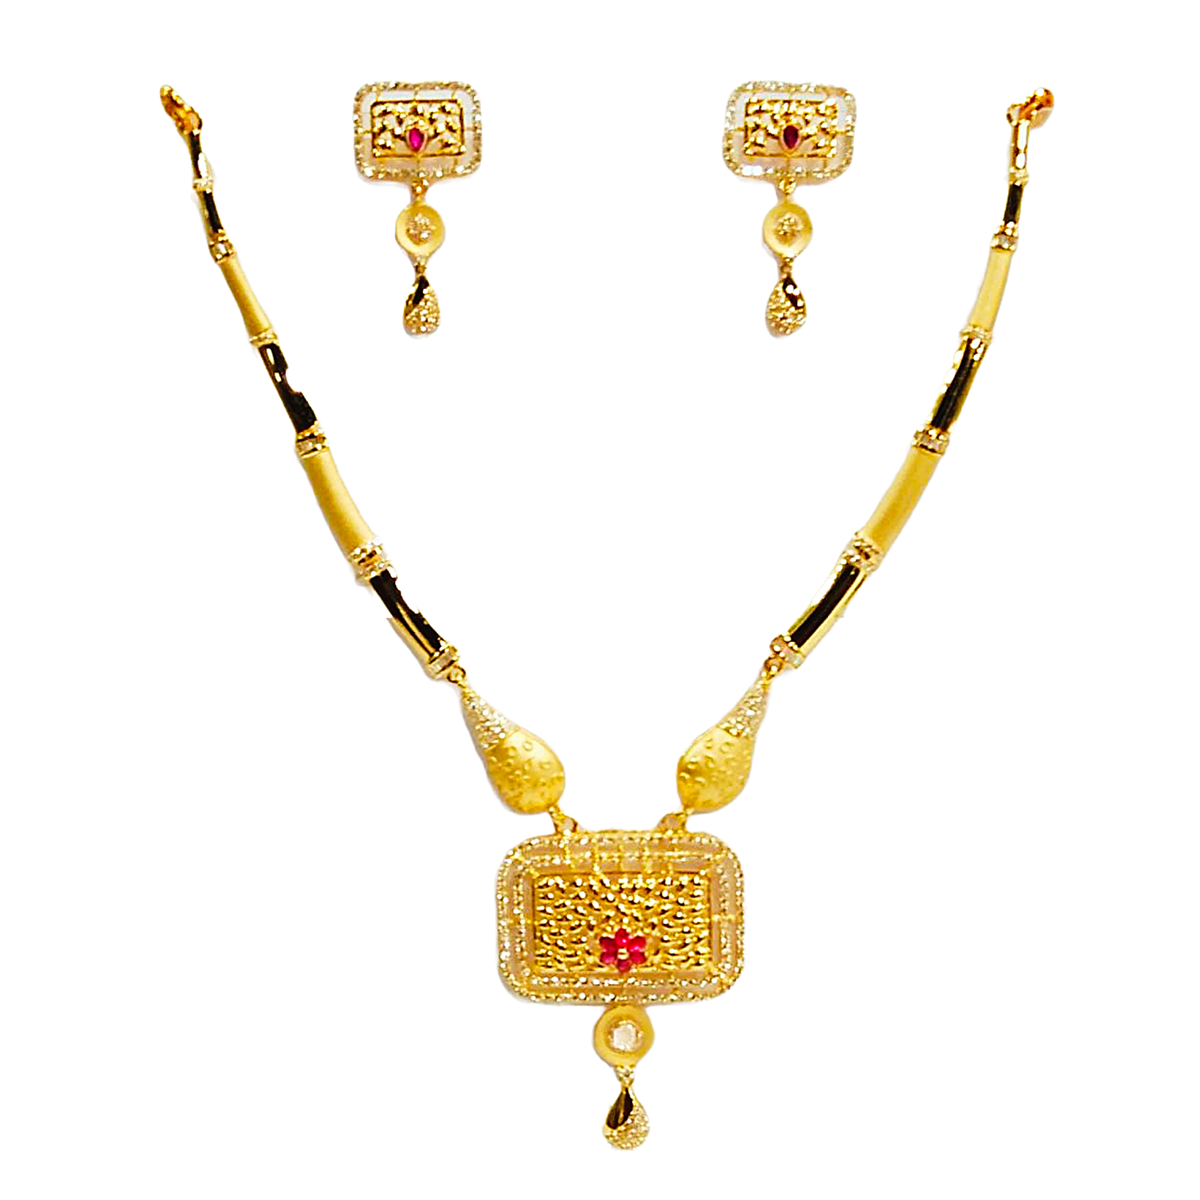 Adhira gold necklace